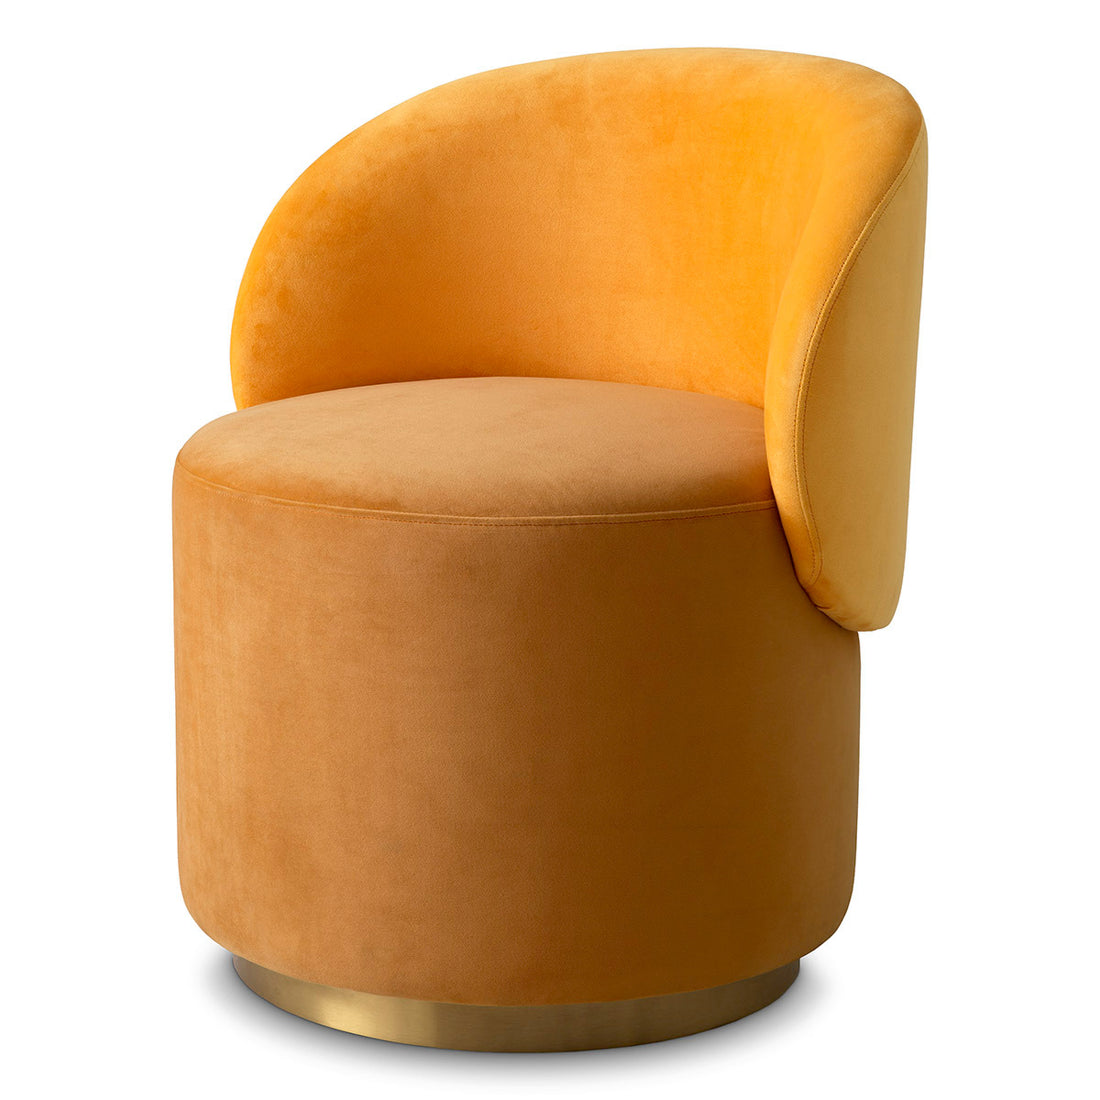 Low Dining Chair Greer roche yellow velvet